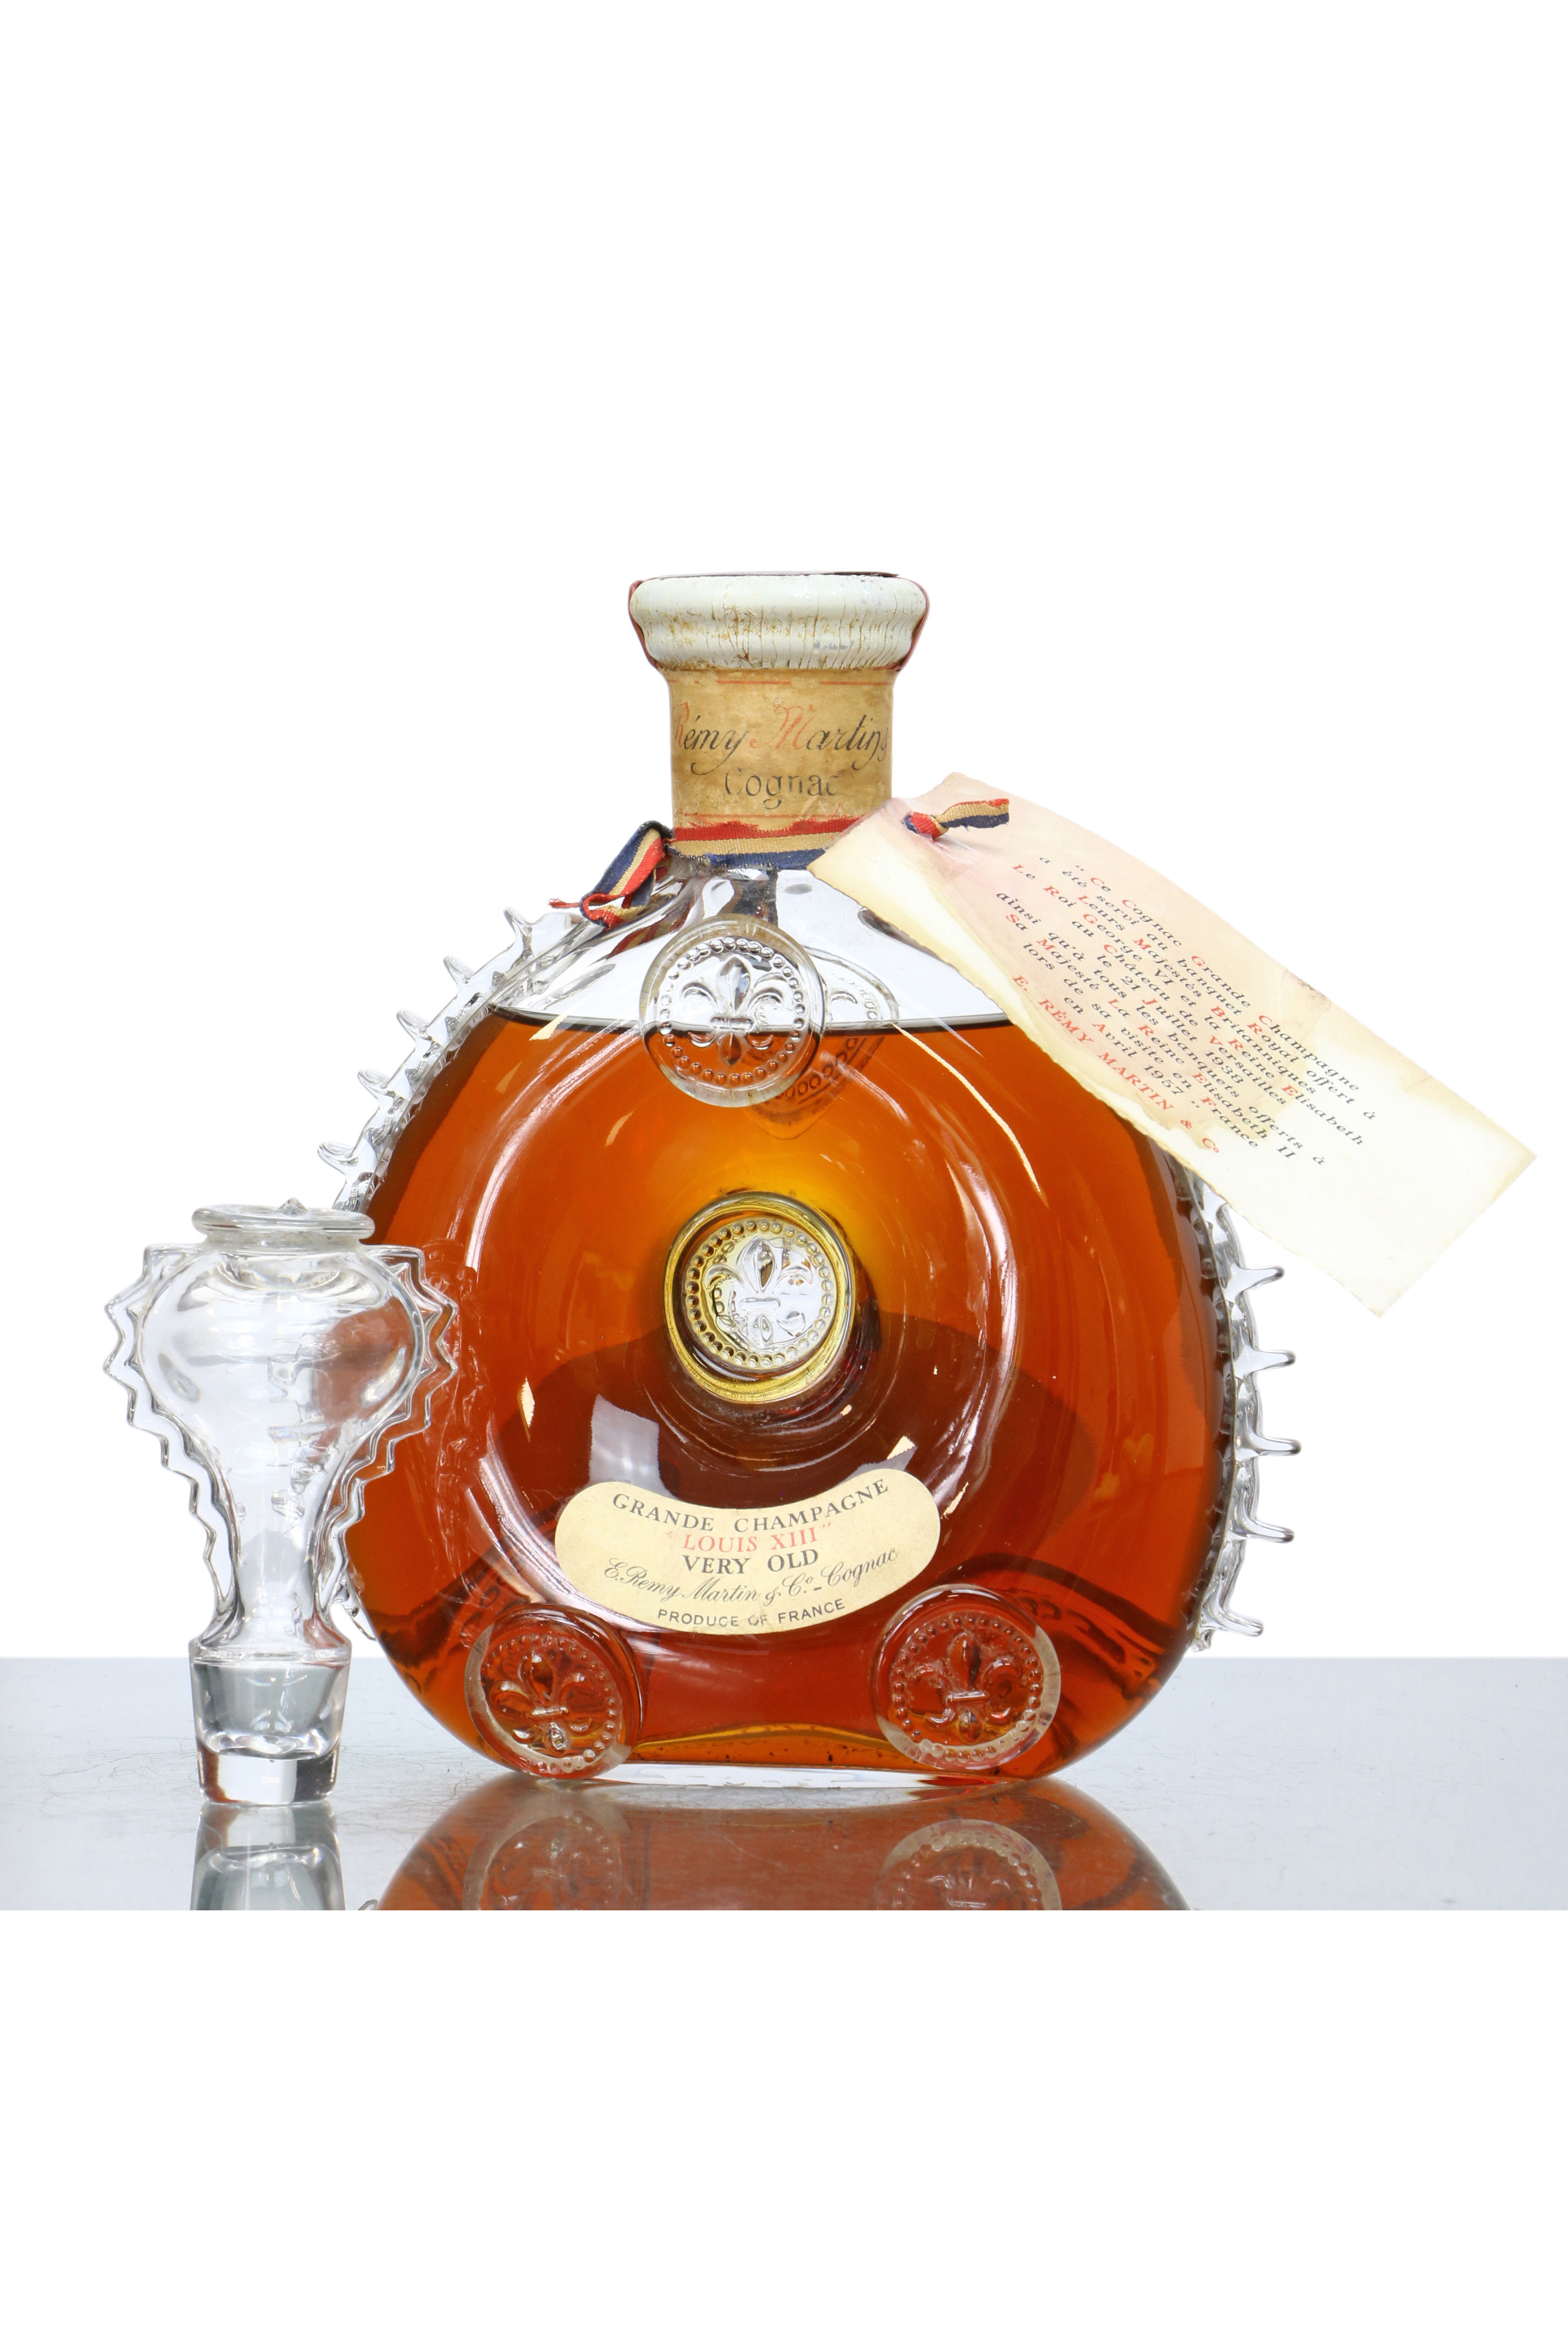 Louis XIII Remy Martin Grand Champagne Cognac - Remy Martin Cognac